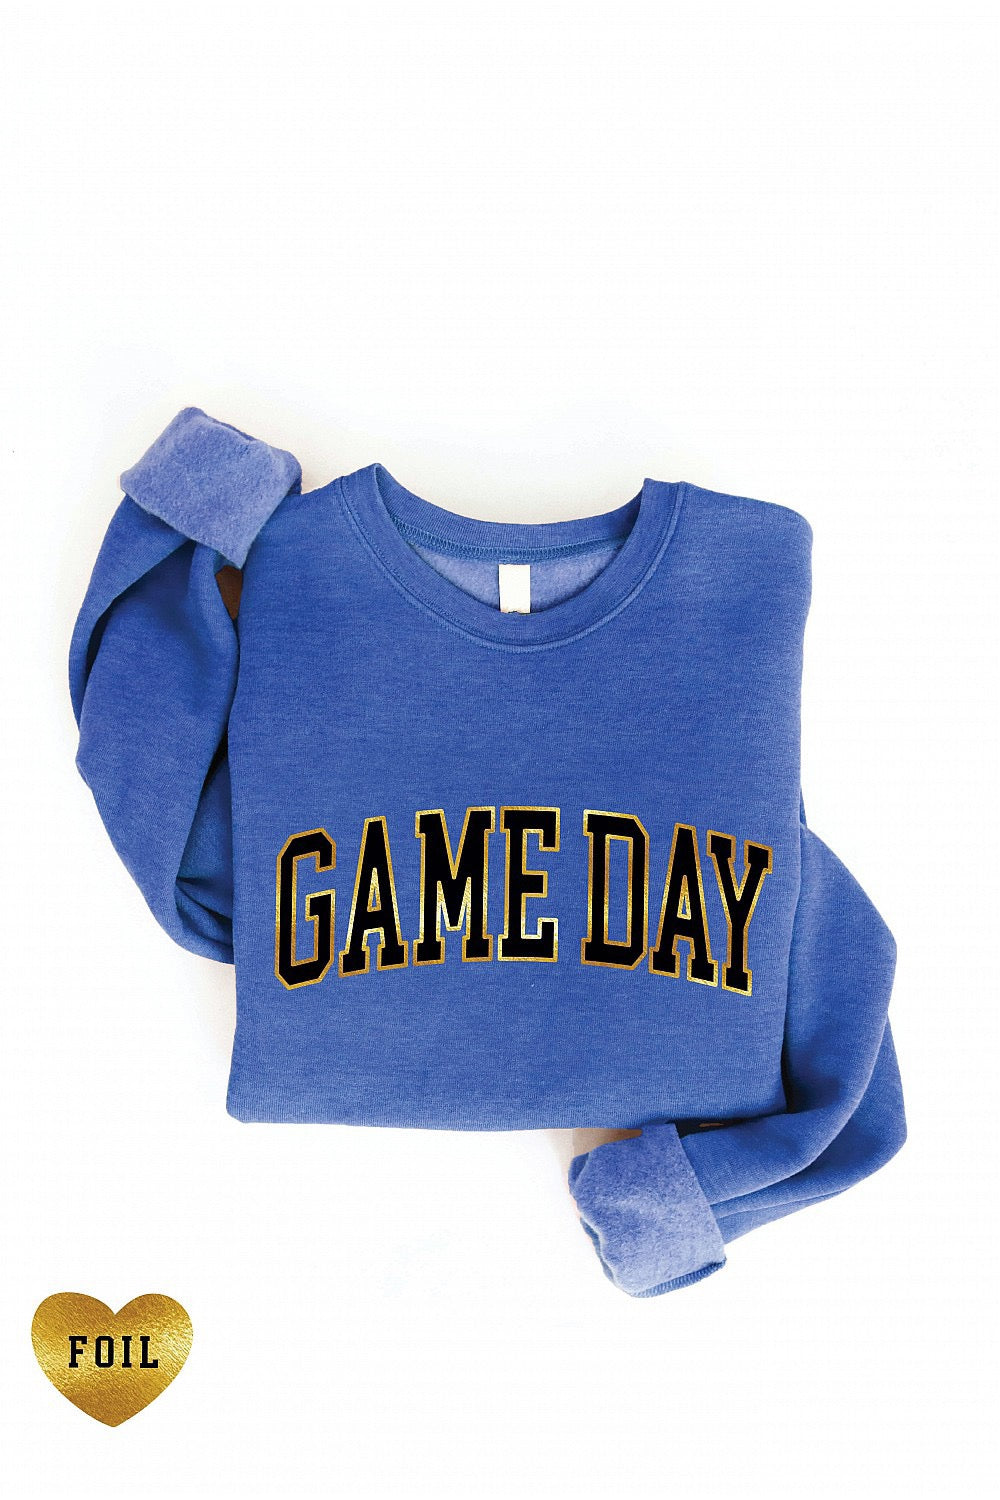 Game Day Foil Sweatshirt